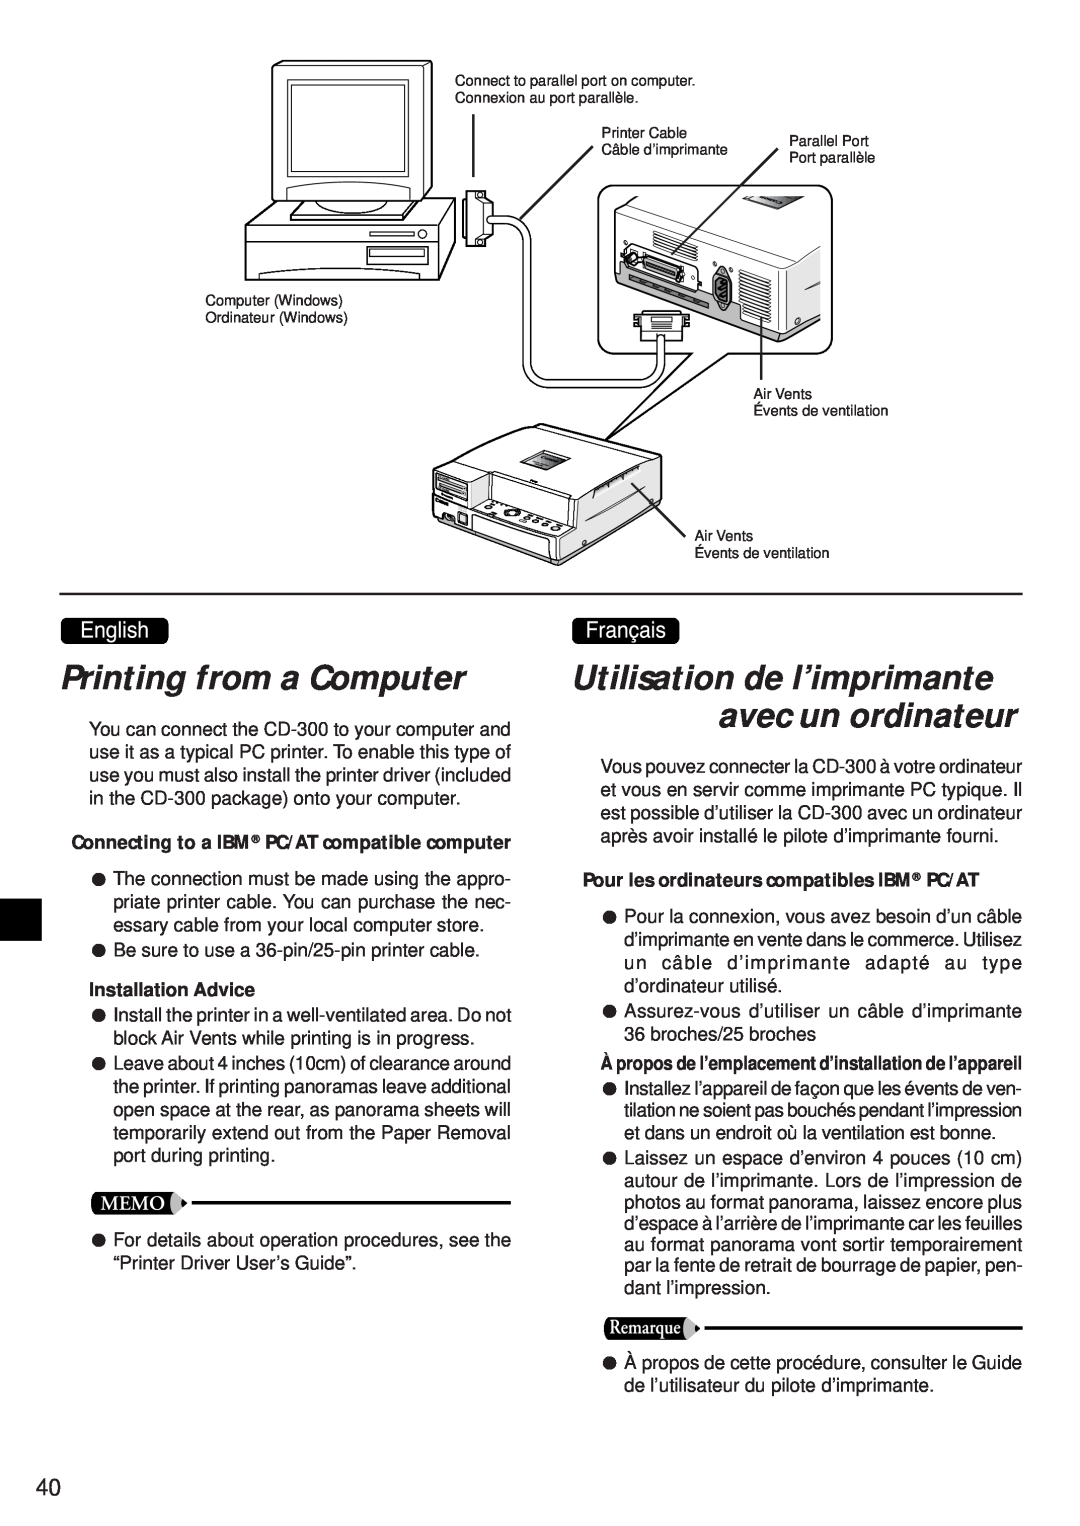 Canon CD-300 manual Printing from a Computer, Utilisation de l’imprimante avec un ordinateur, Installation Advice 